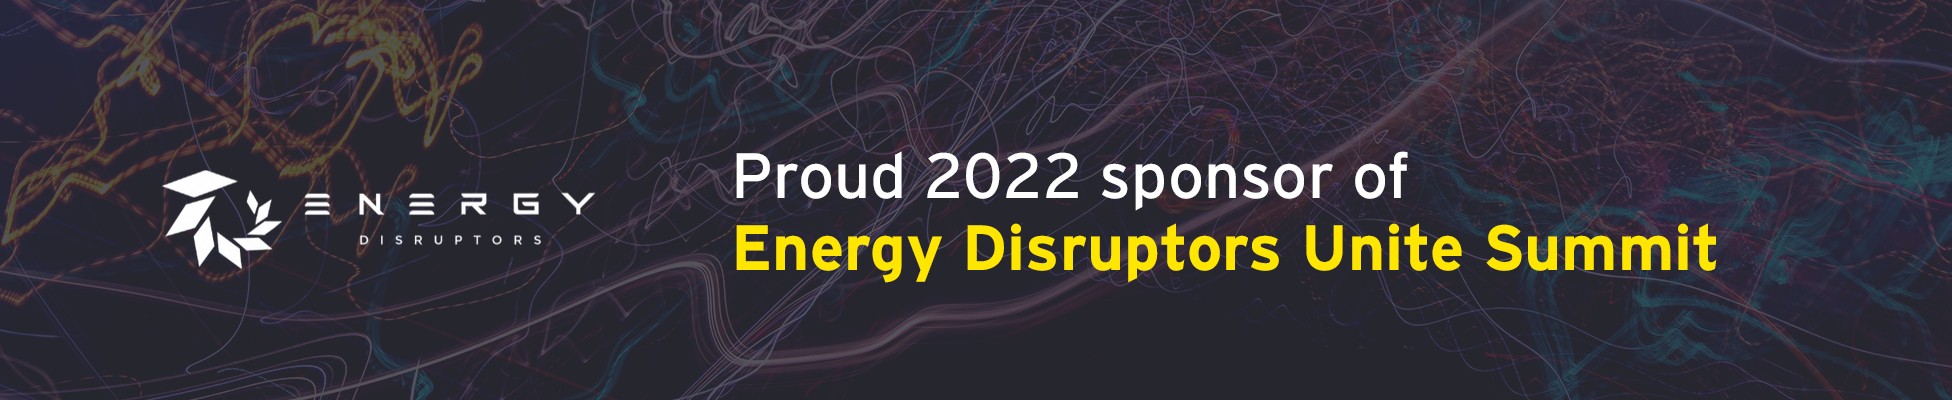 Proud 2022 sponsor of Energy Disruptors Unite Summit